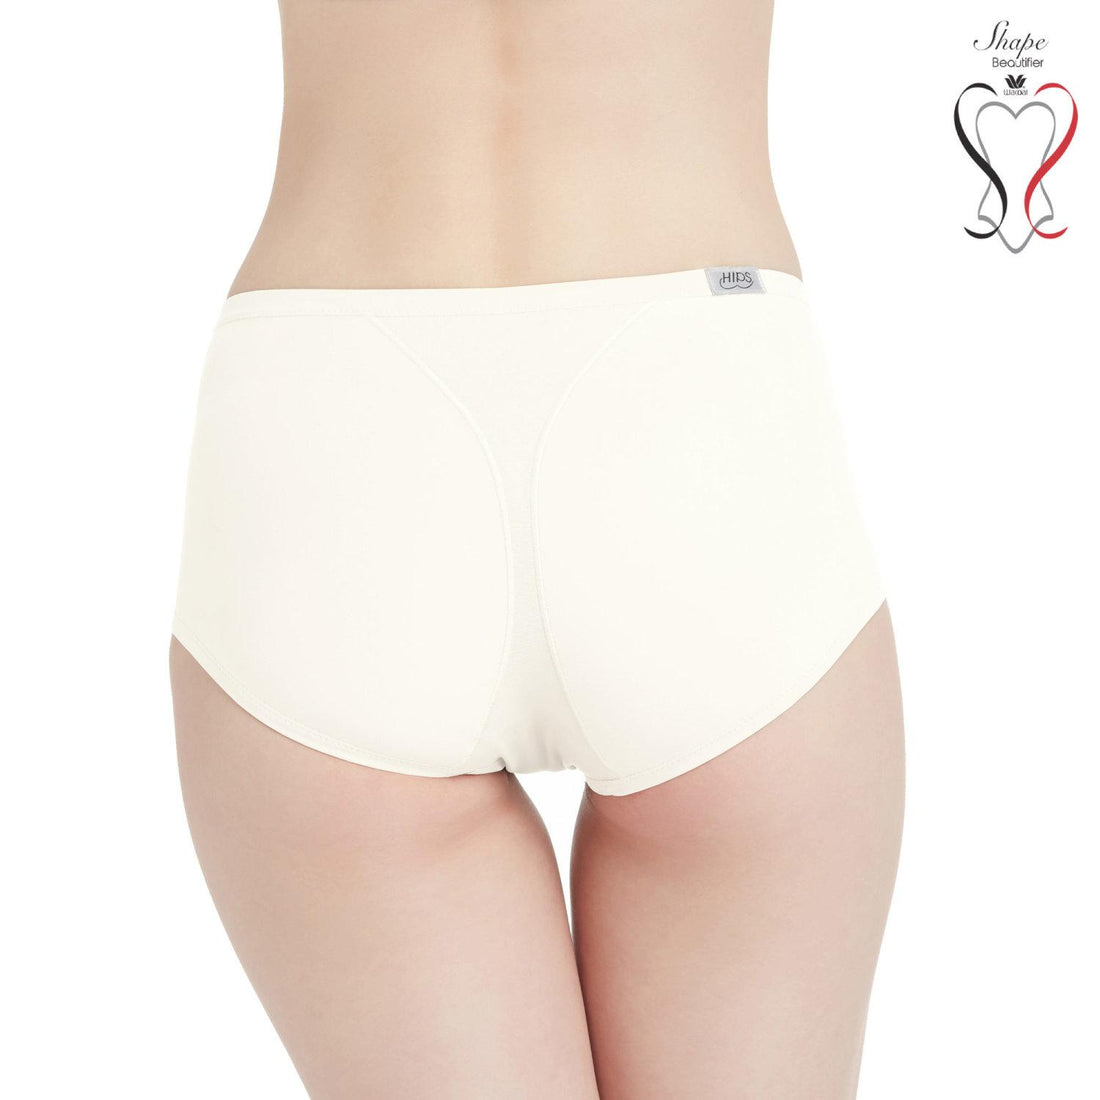 Wacoal Shapewear Hips Hip lift pants and beautiful buttocks, model WY1129, cream color (CR)